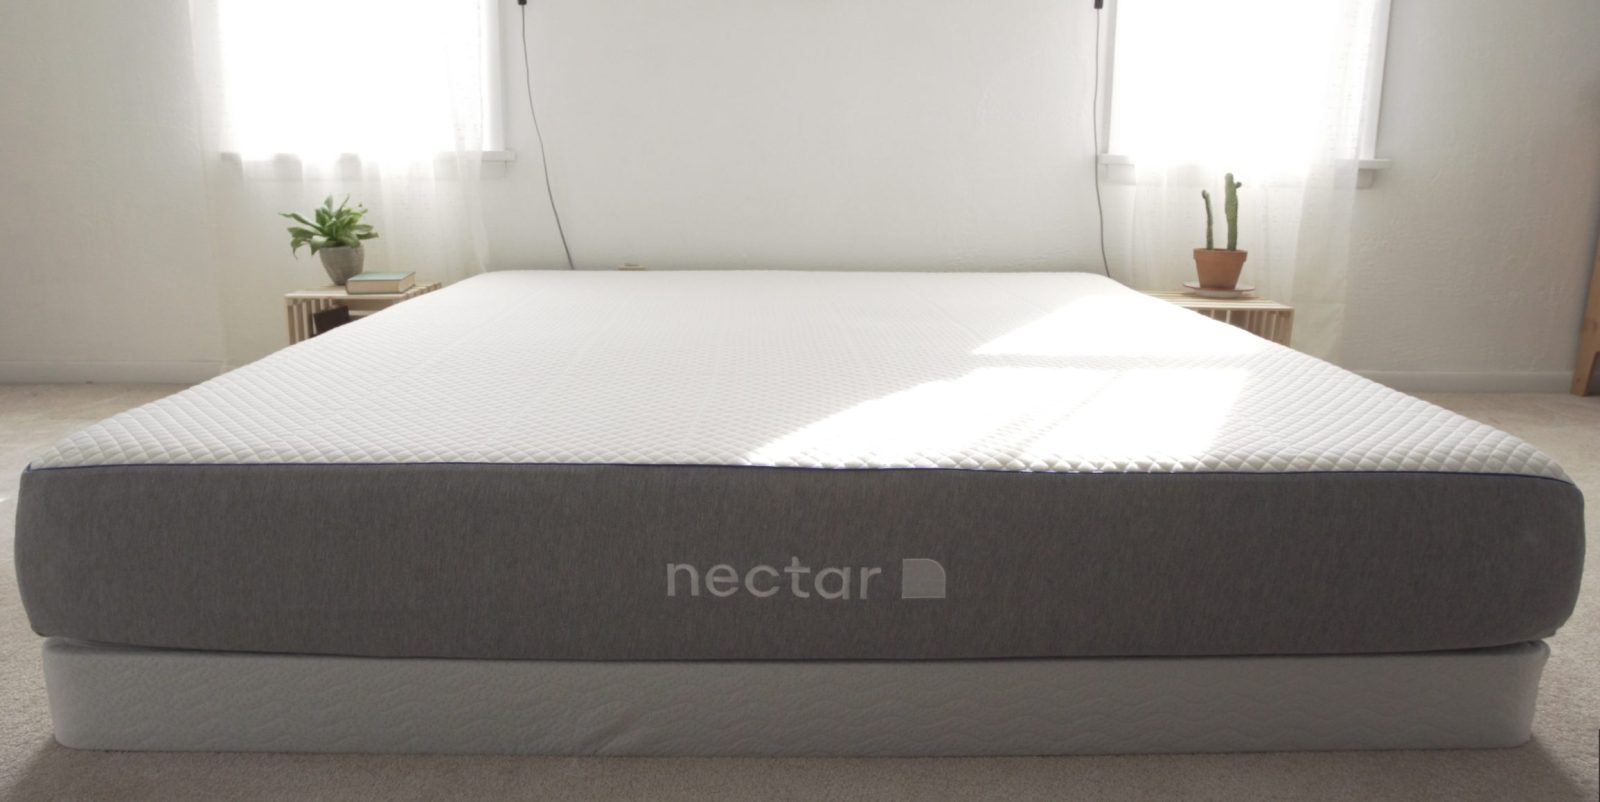 nectar mattress with purple foundation